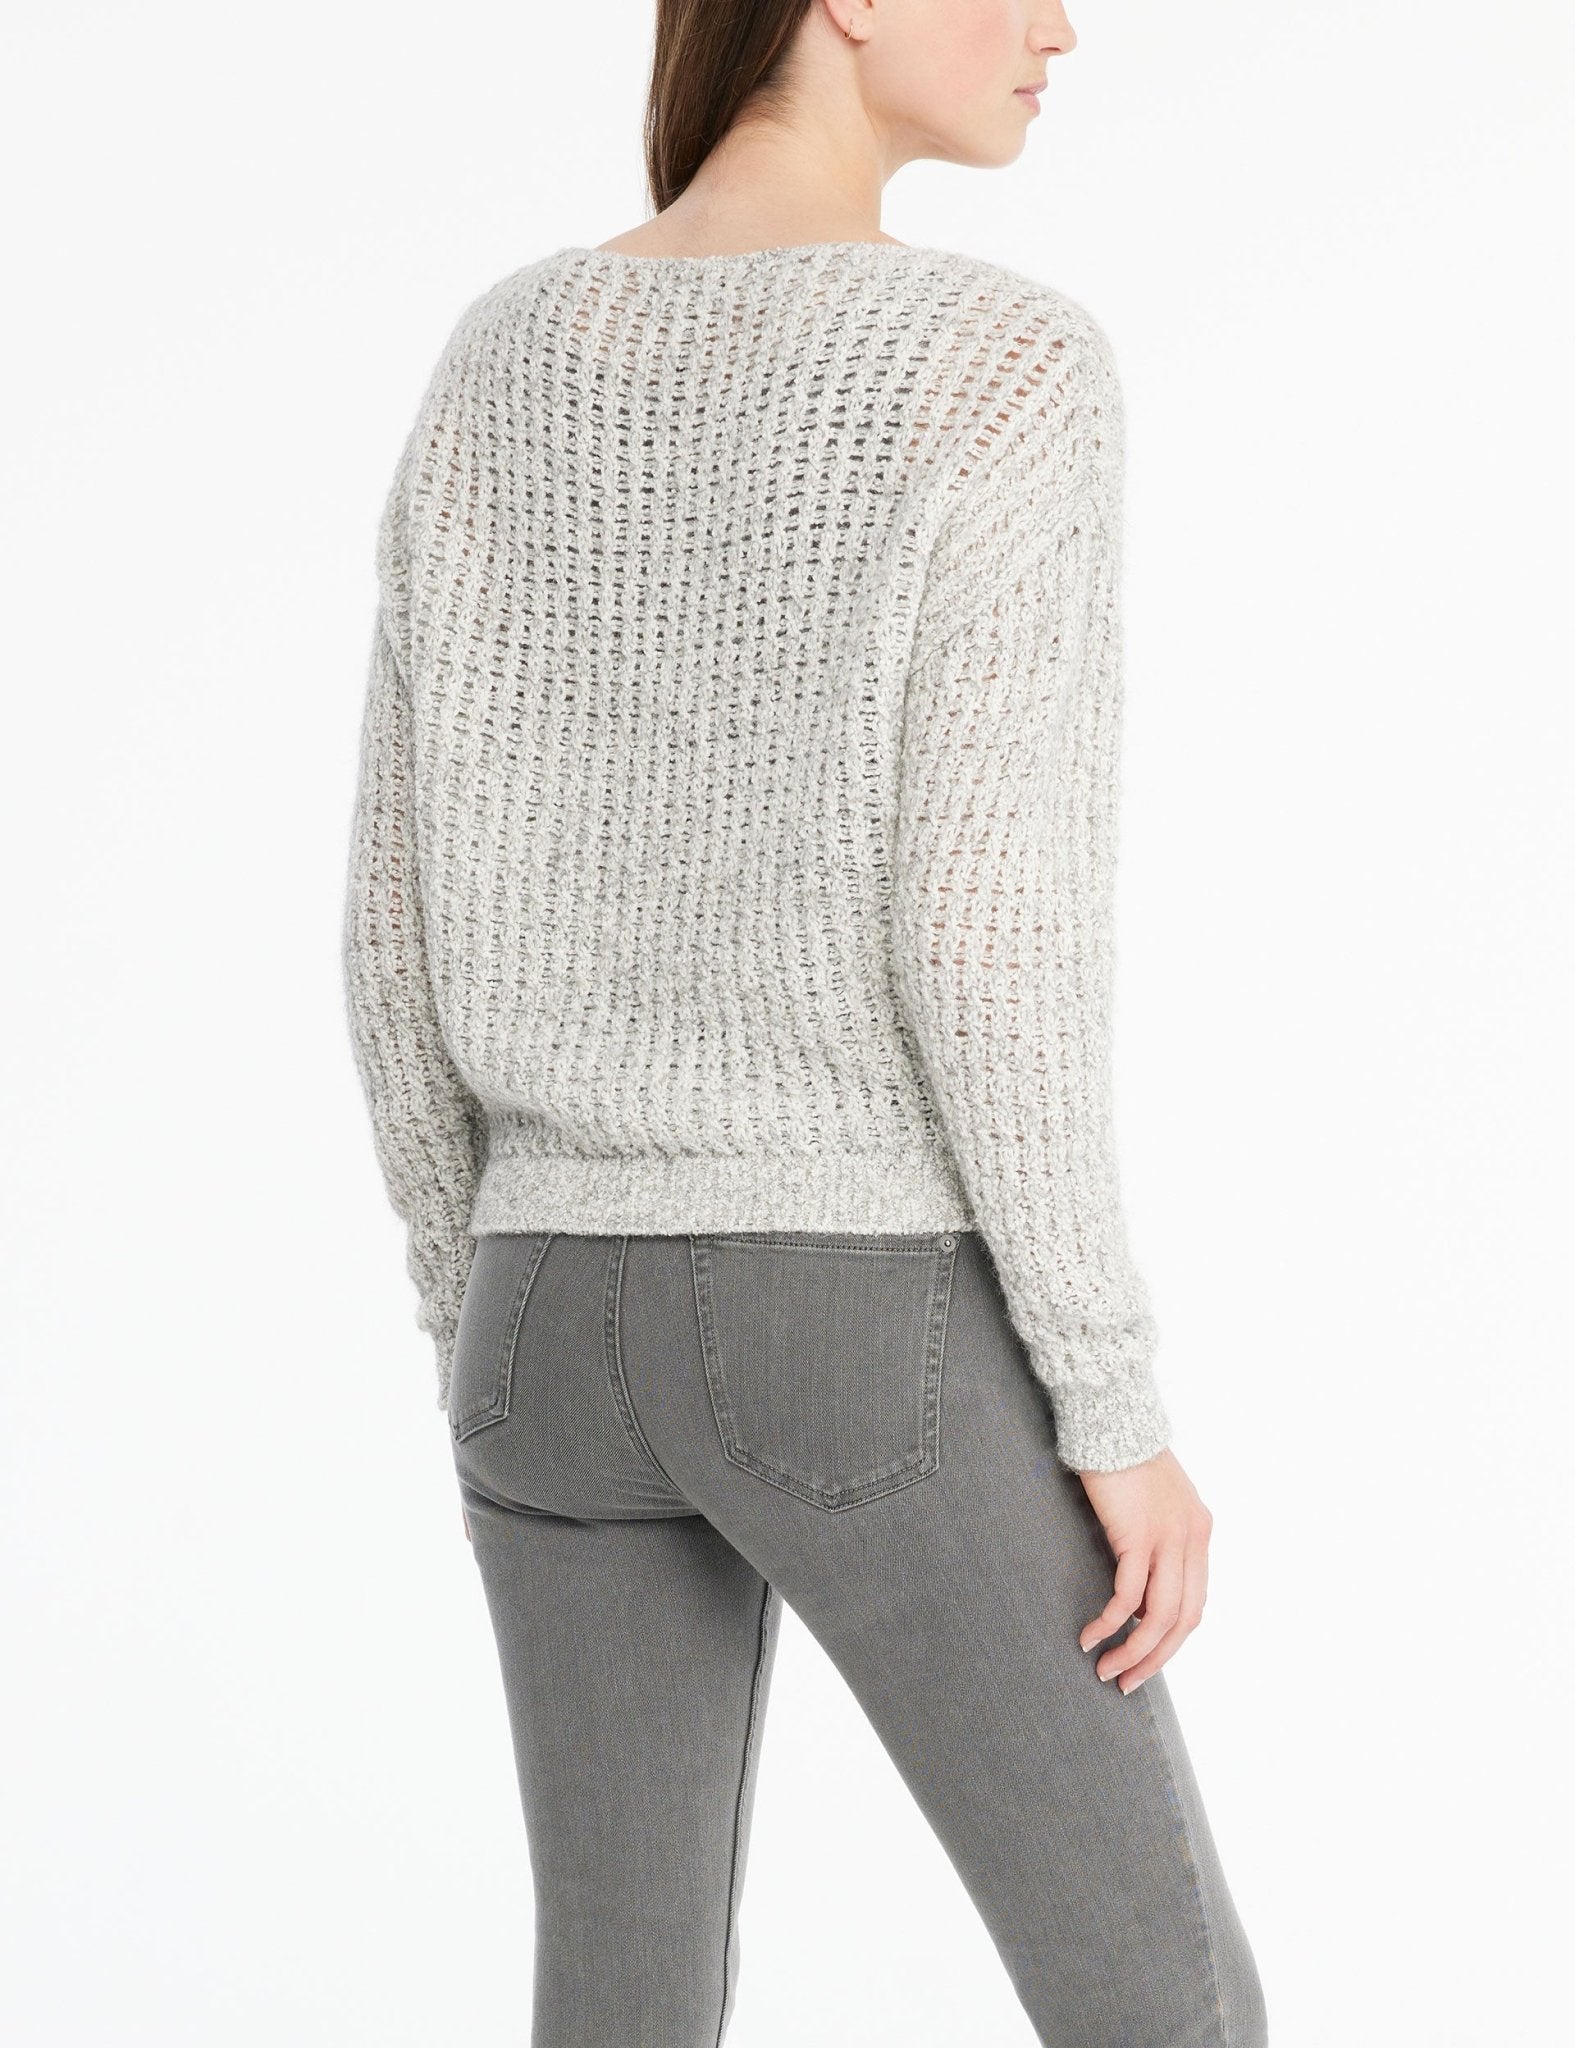 Fishnet Knit Sweater - Sarah Pacini - Danali - Sweater 232.11.114